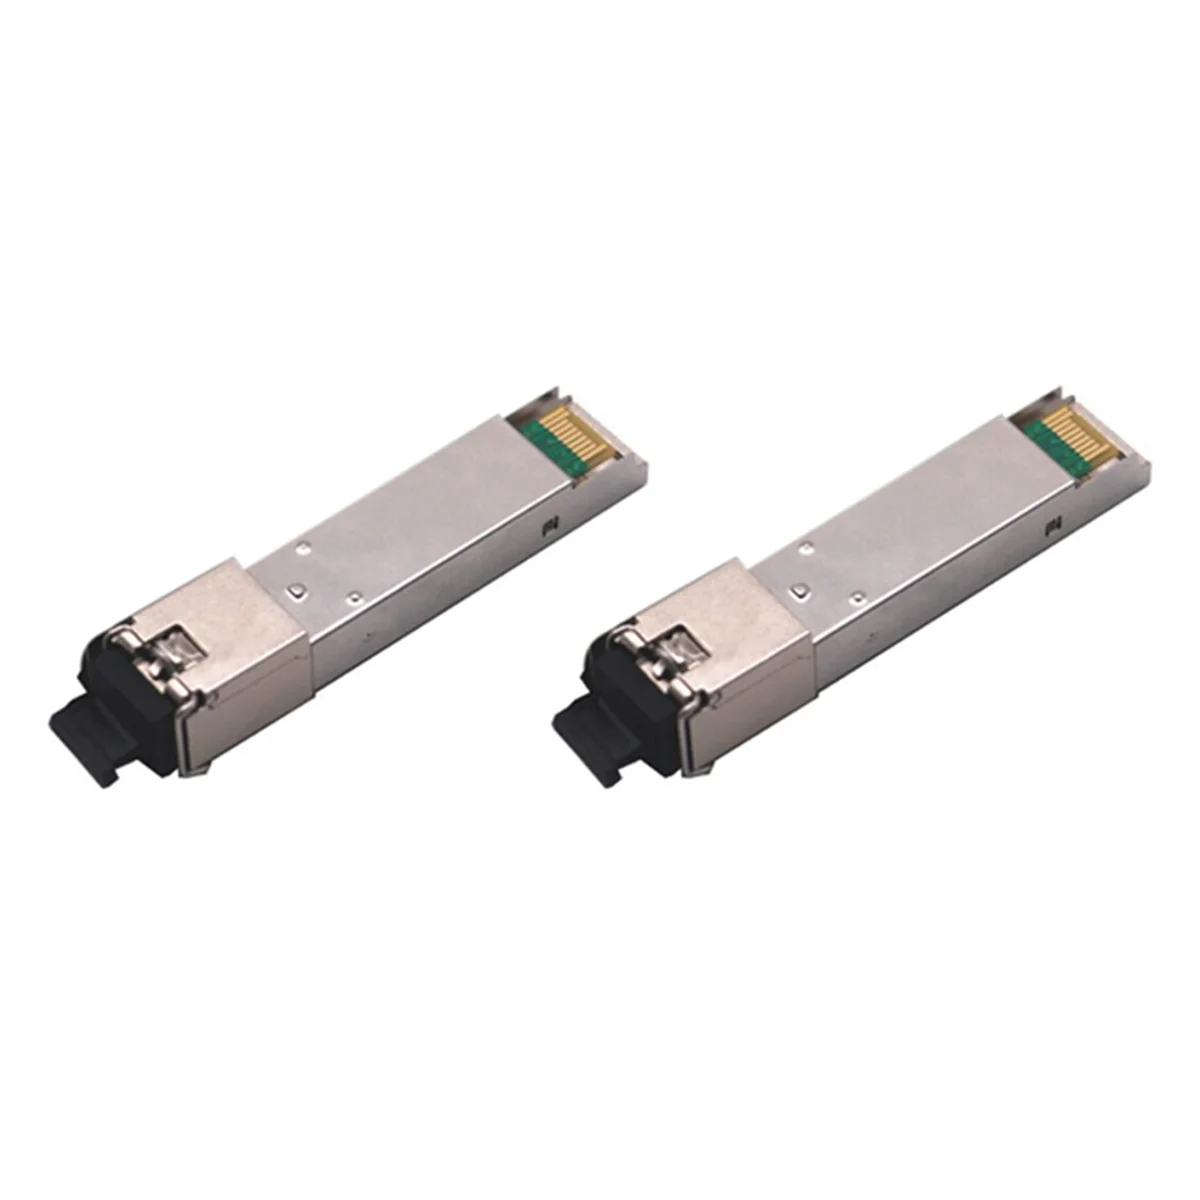 

2X 20KM Single Fiber SC GPON Module Switch Gigabit SFP Optical Module Compatible for with HP H3C Switch